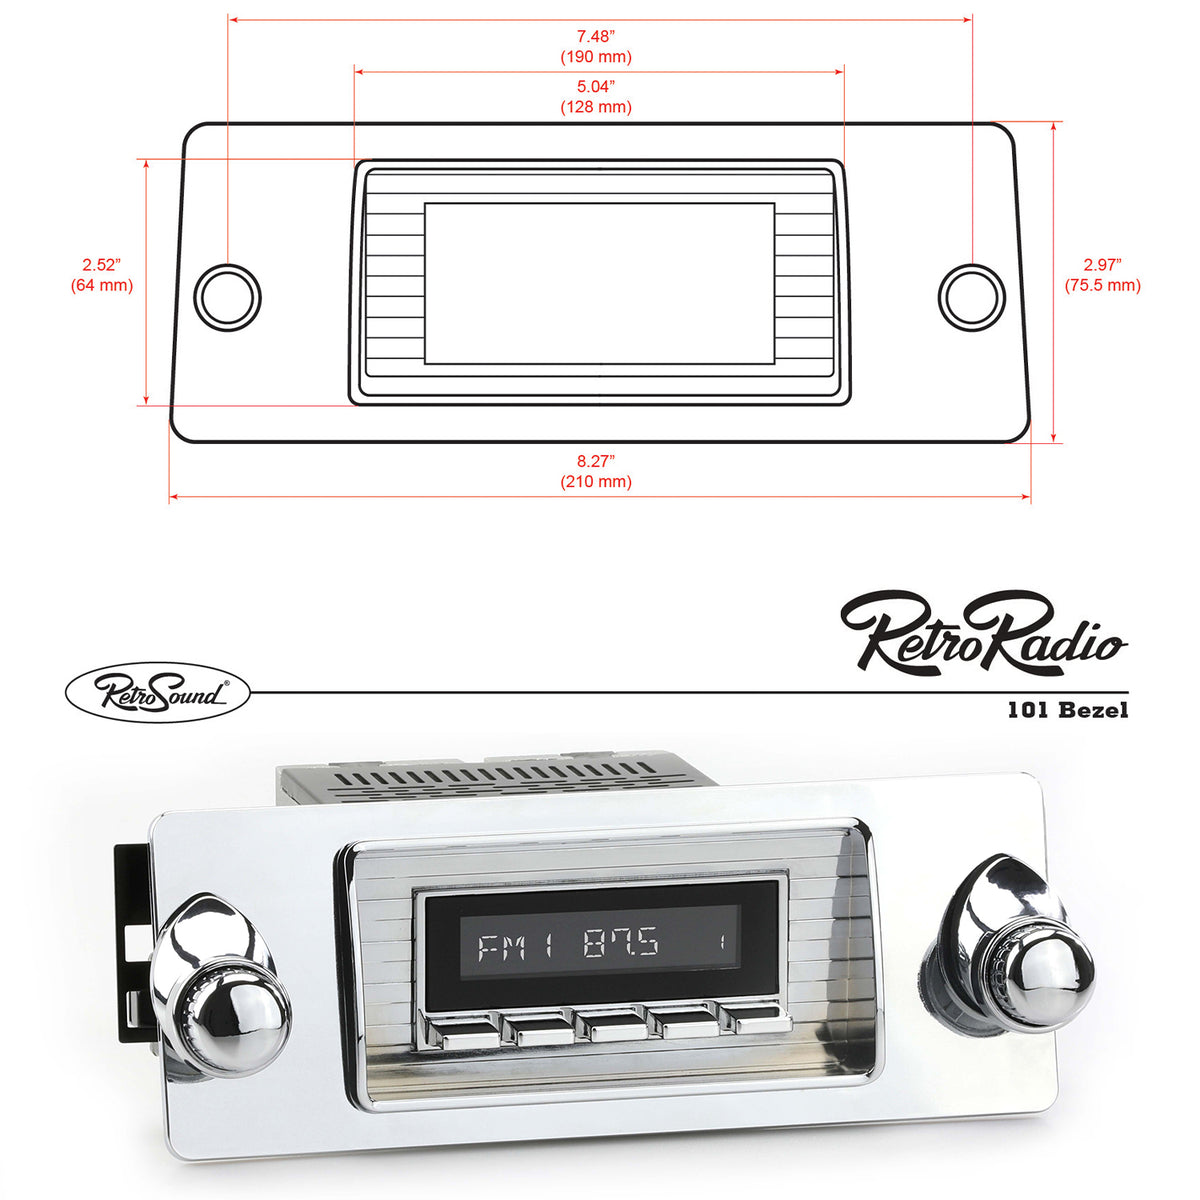 RetroSound. Modern Sound for Your Classic. – Retro Manufacturing